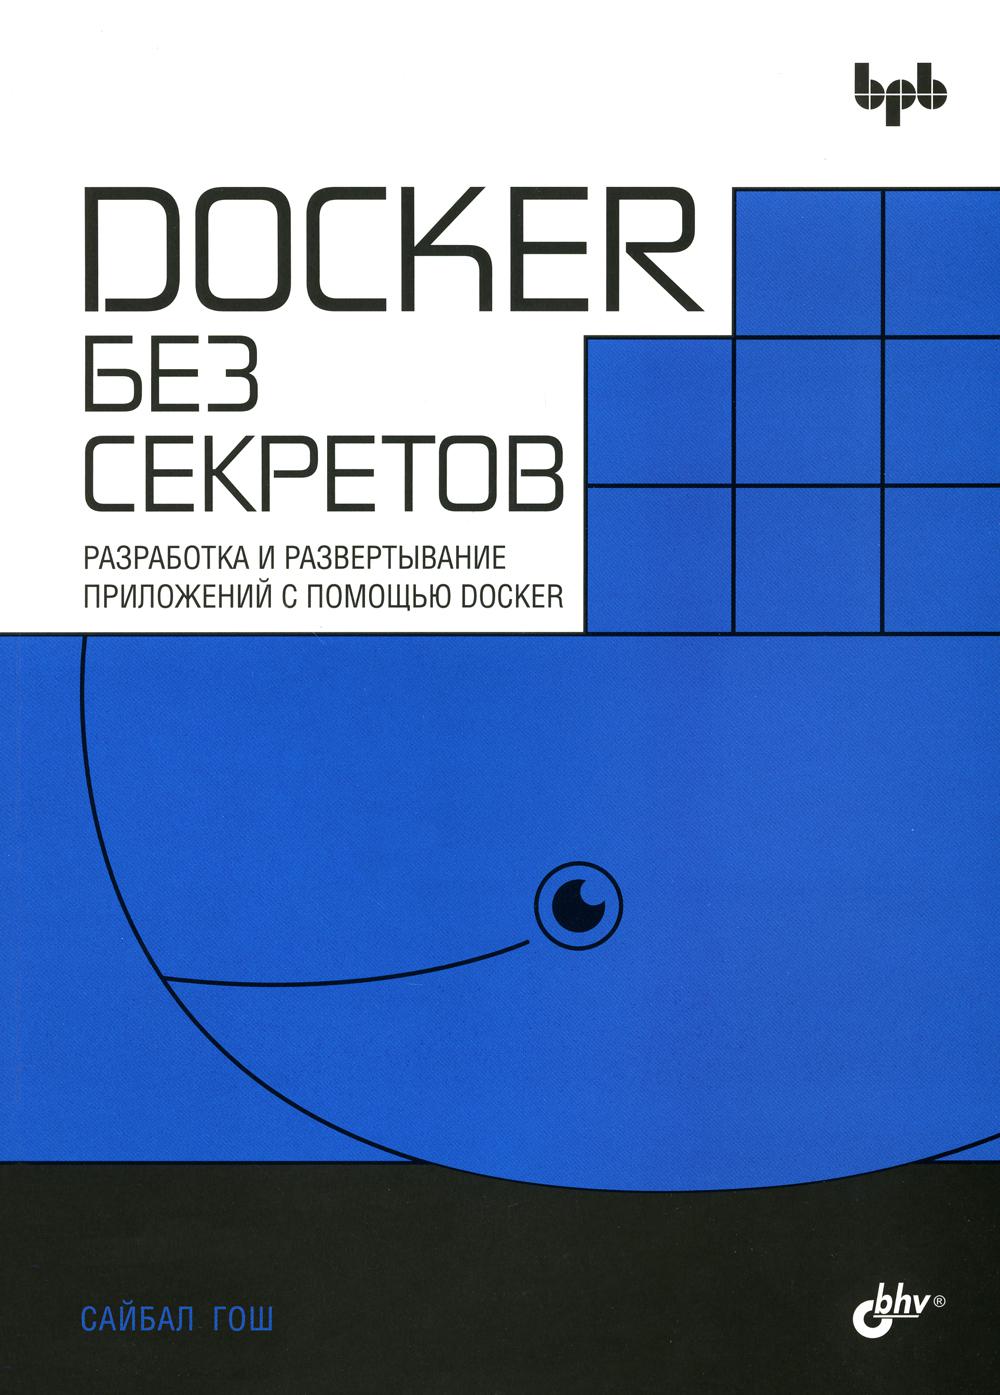 Docker  